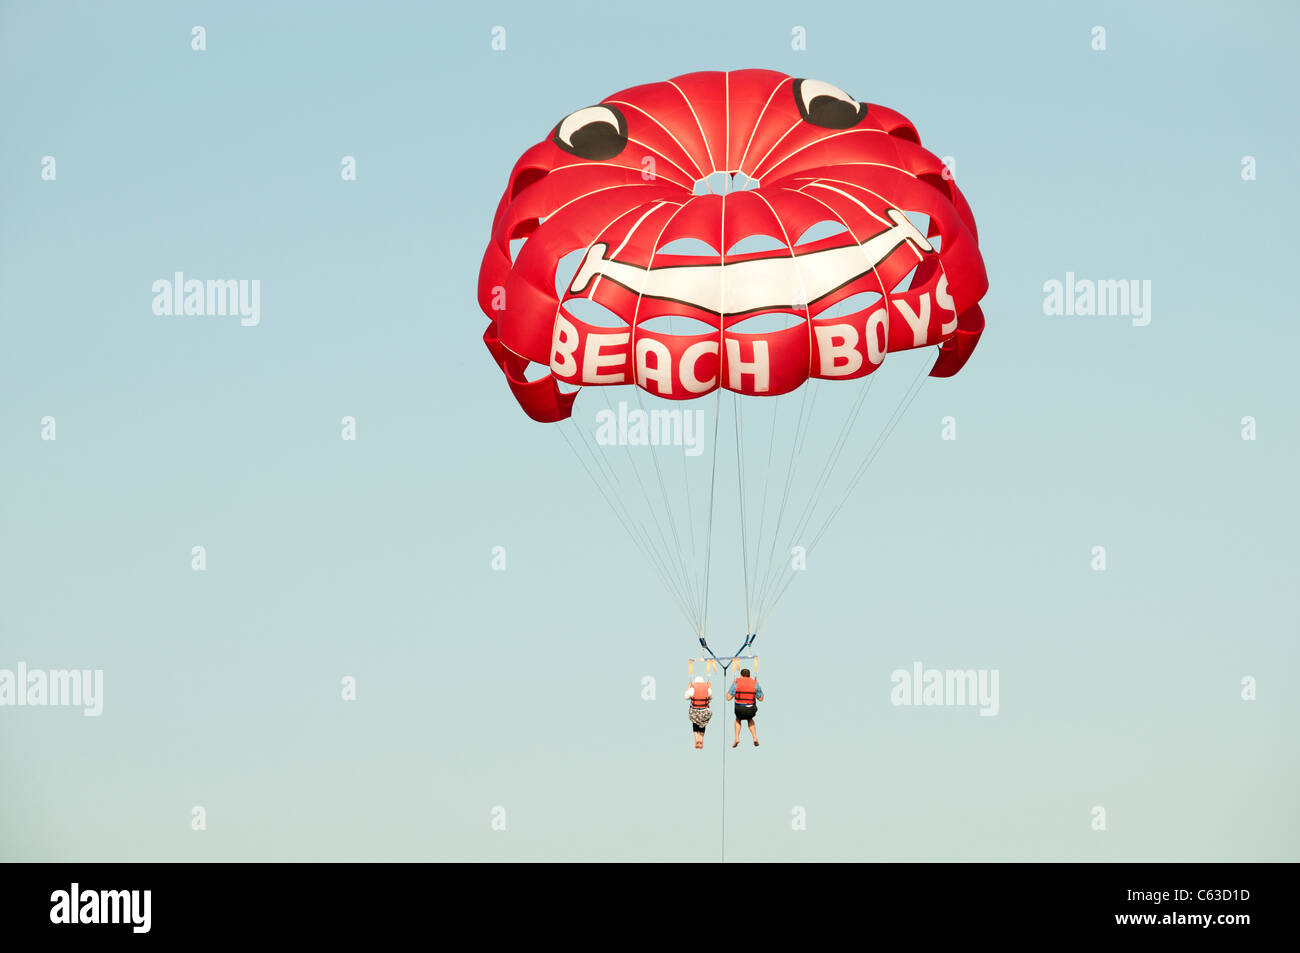 La Turchia mare parasail para volo a vela barca spiaggia beach boys Foto Stock